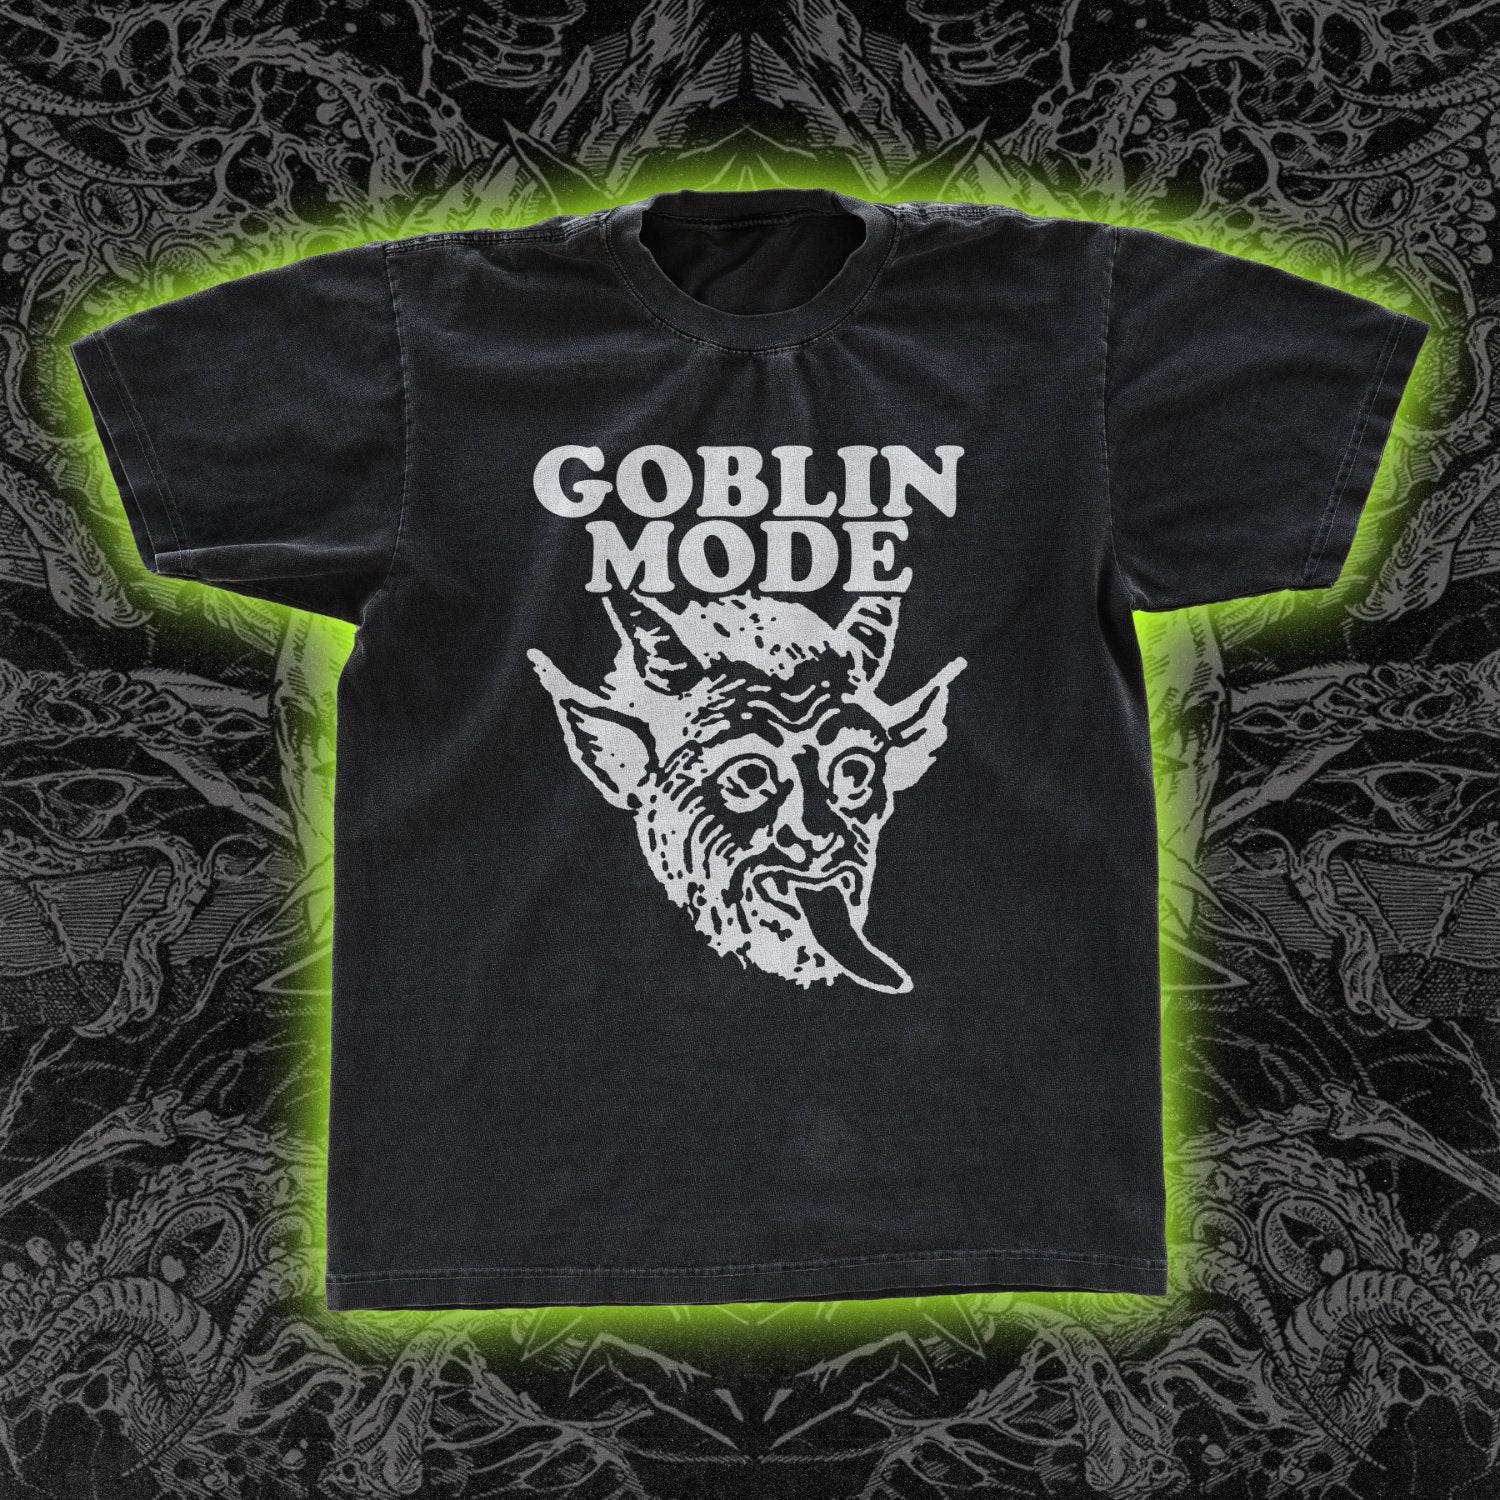 Goblin Mode Classic Tee